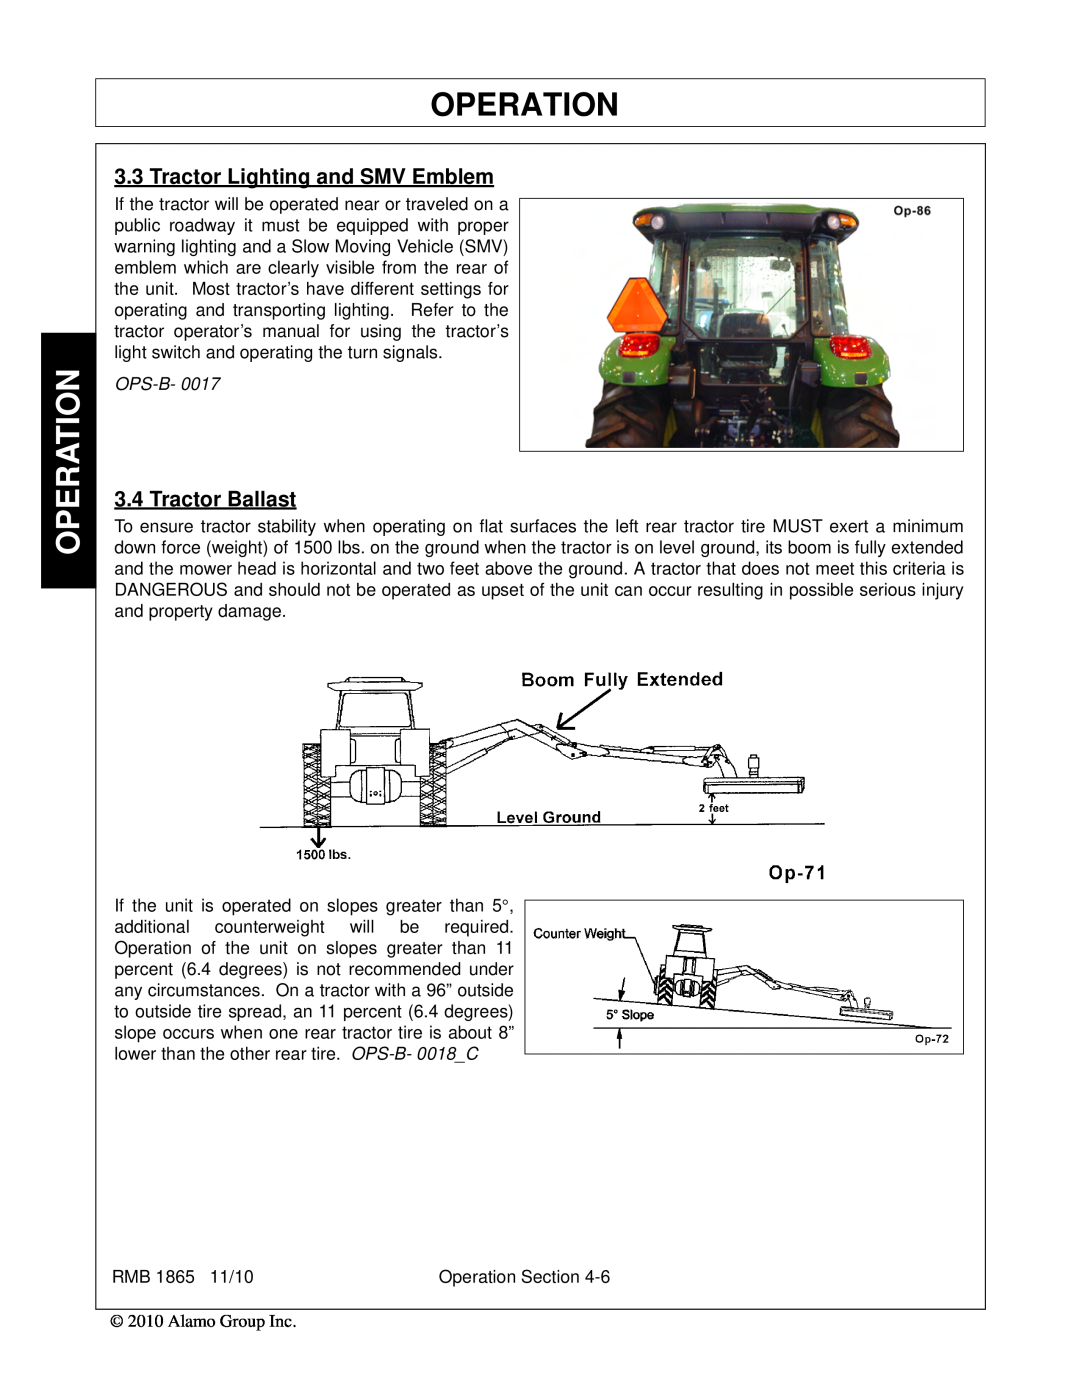 Bush Hog RMB 1865 manual Operation, Tractor Lighting and SMV Emblem, Tractor Ballast, Ops-B 